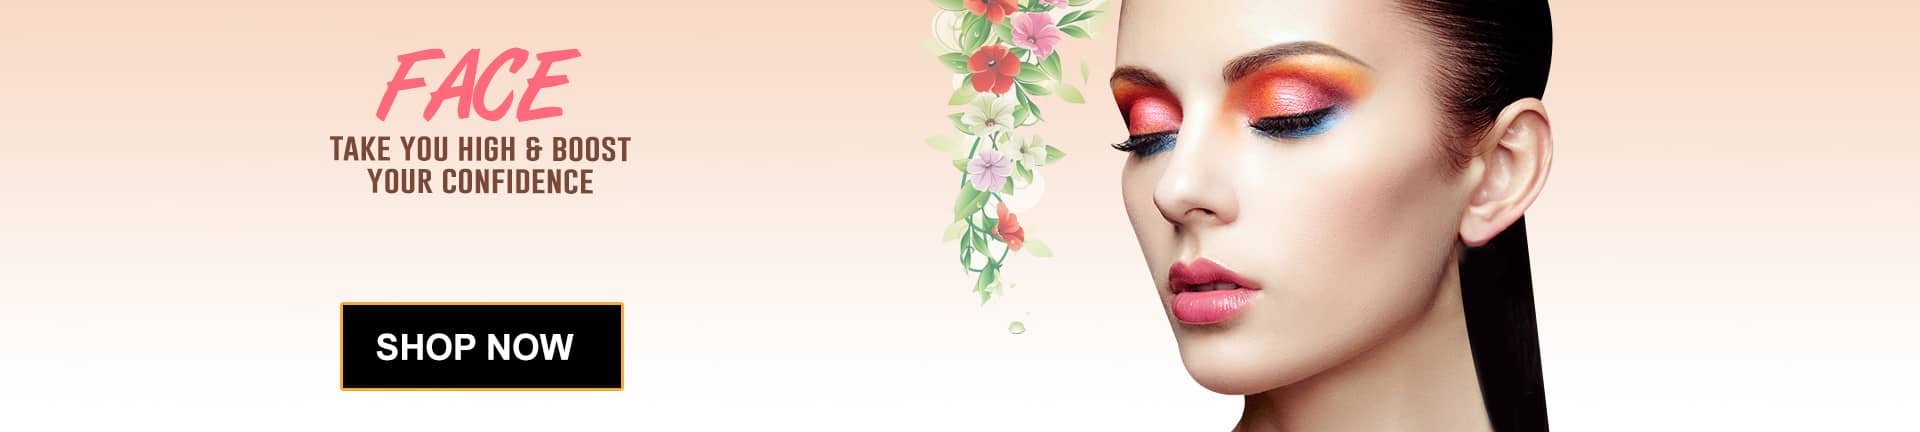 Buy Original Face Makeup Products Online in Pakistan - Kayazar